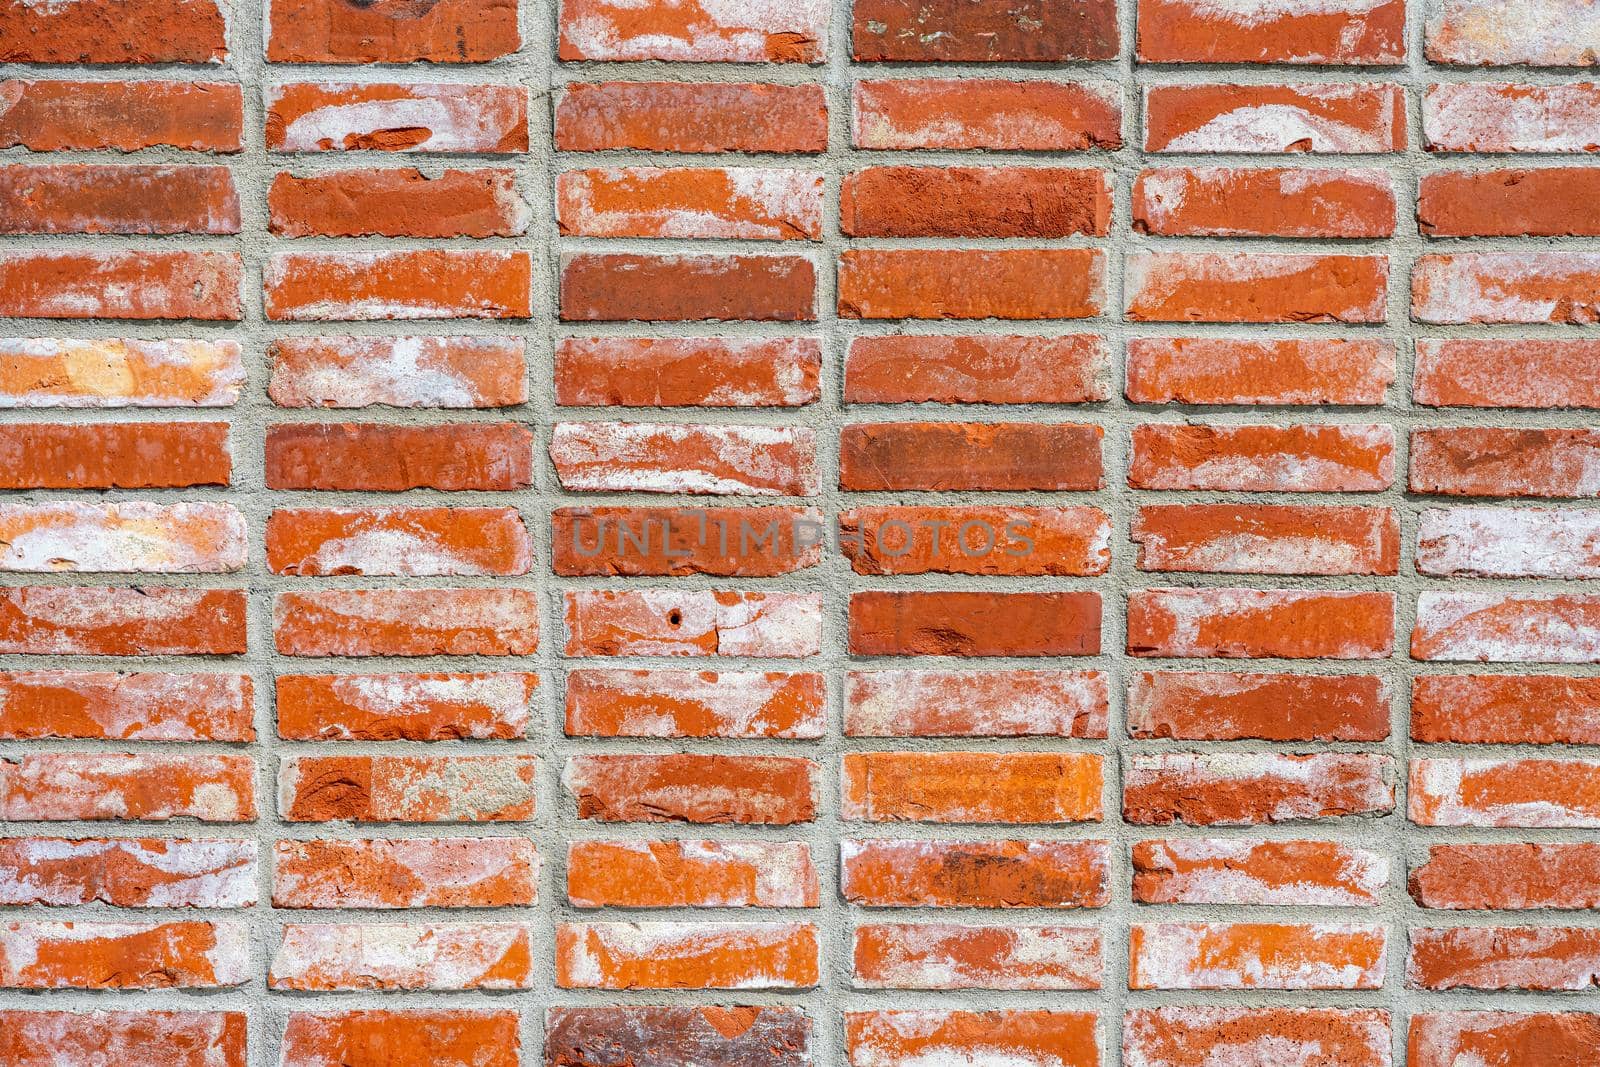 Wall made of red clinker bricks by elxeneize